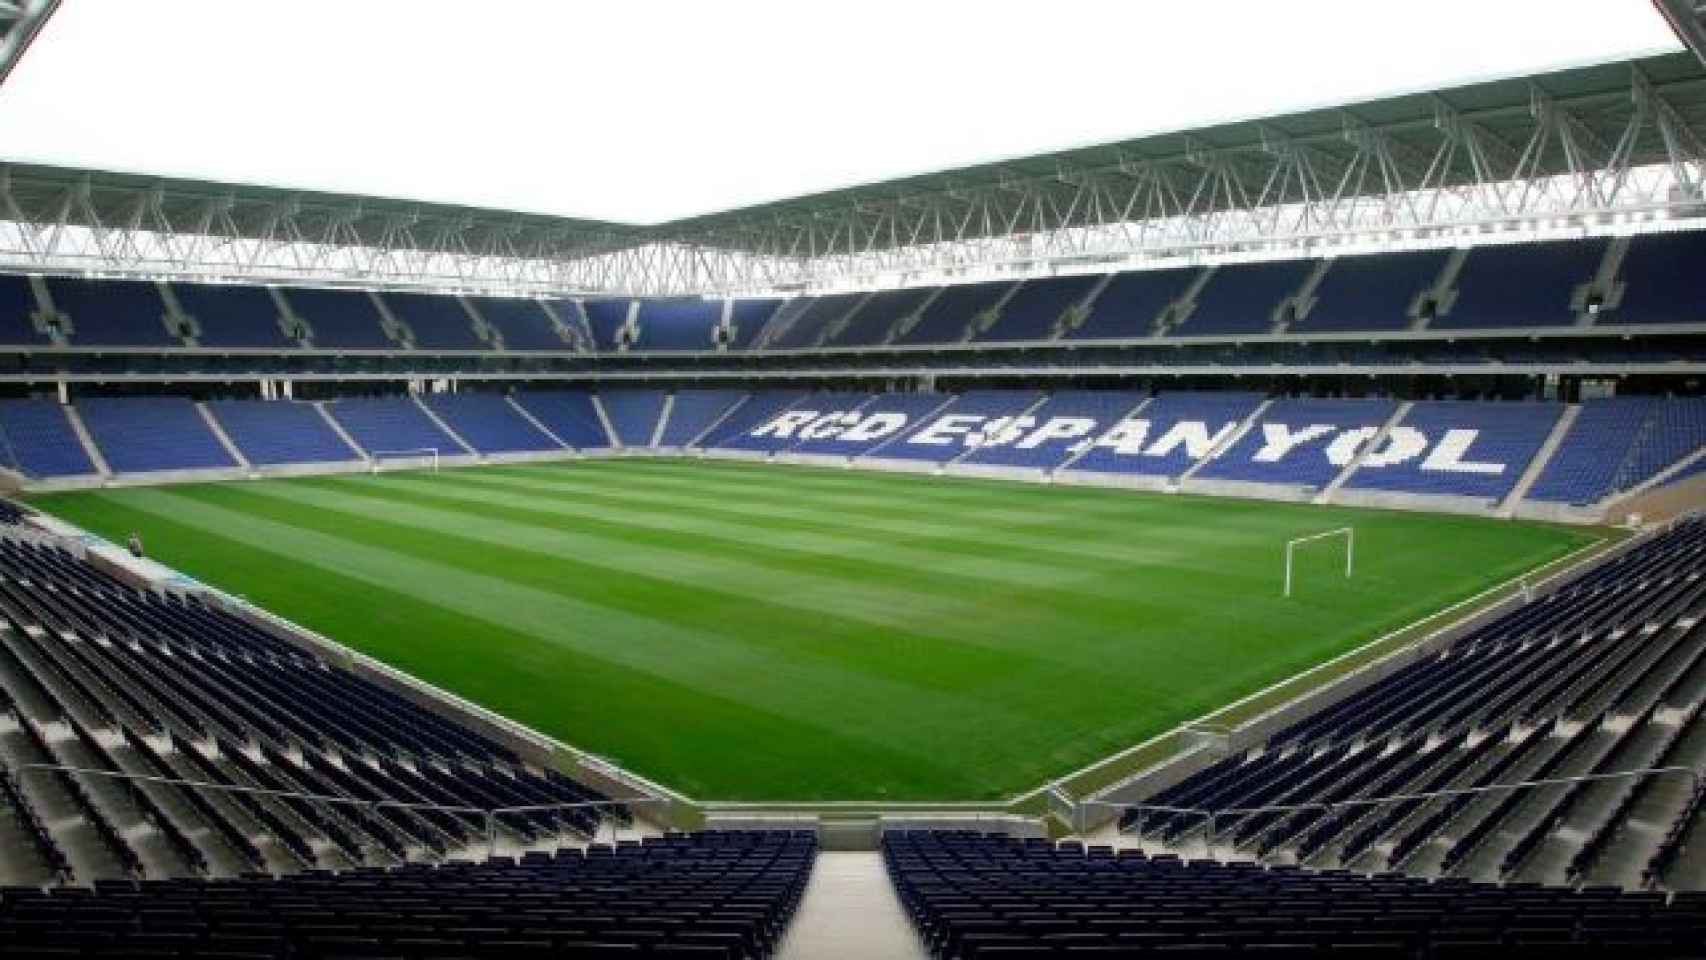 El RCDE Stadium